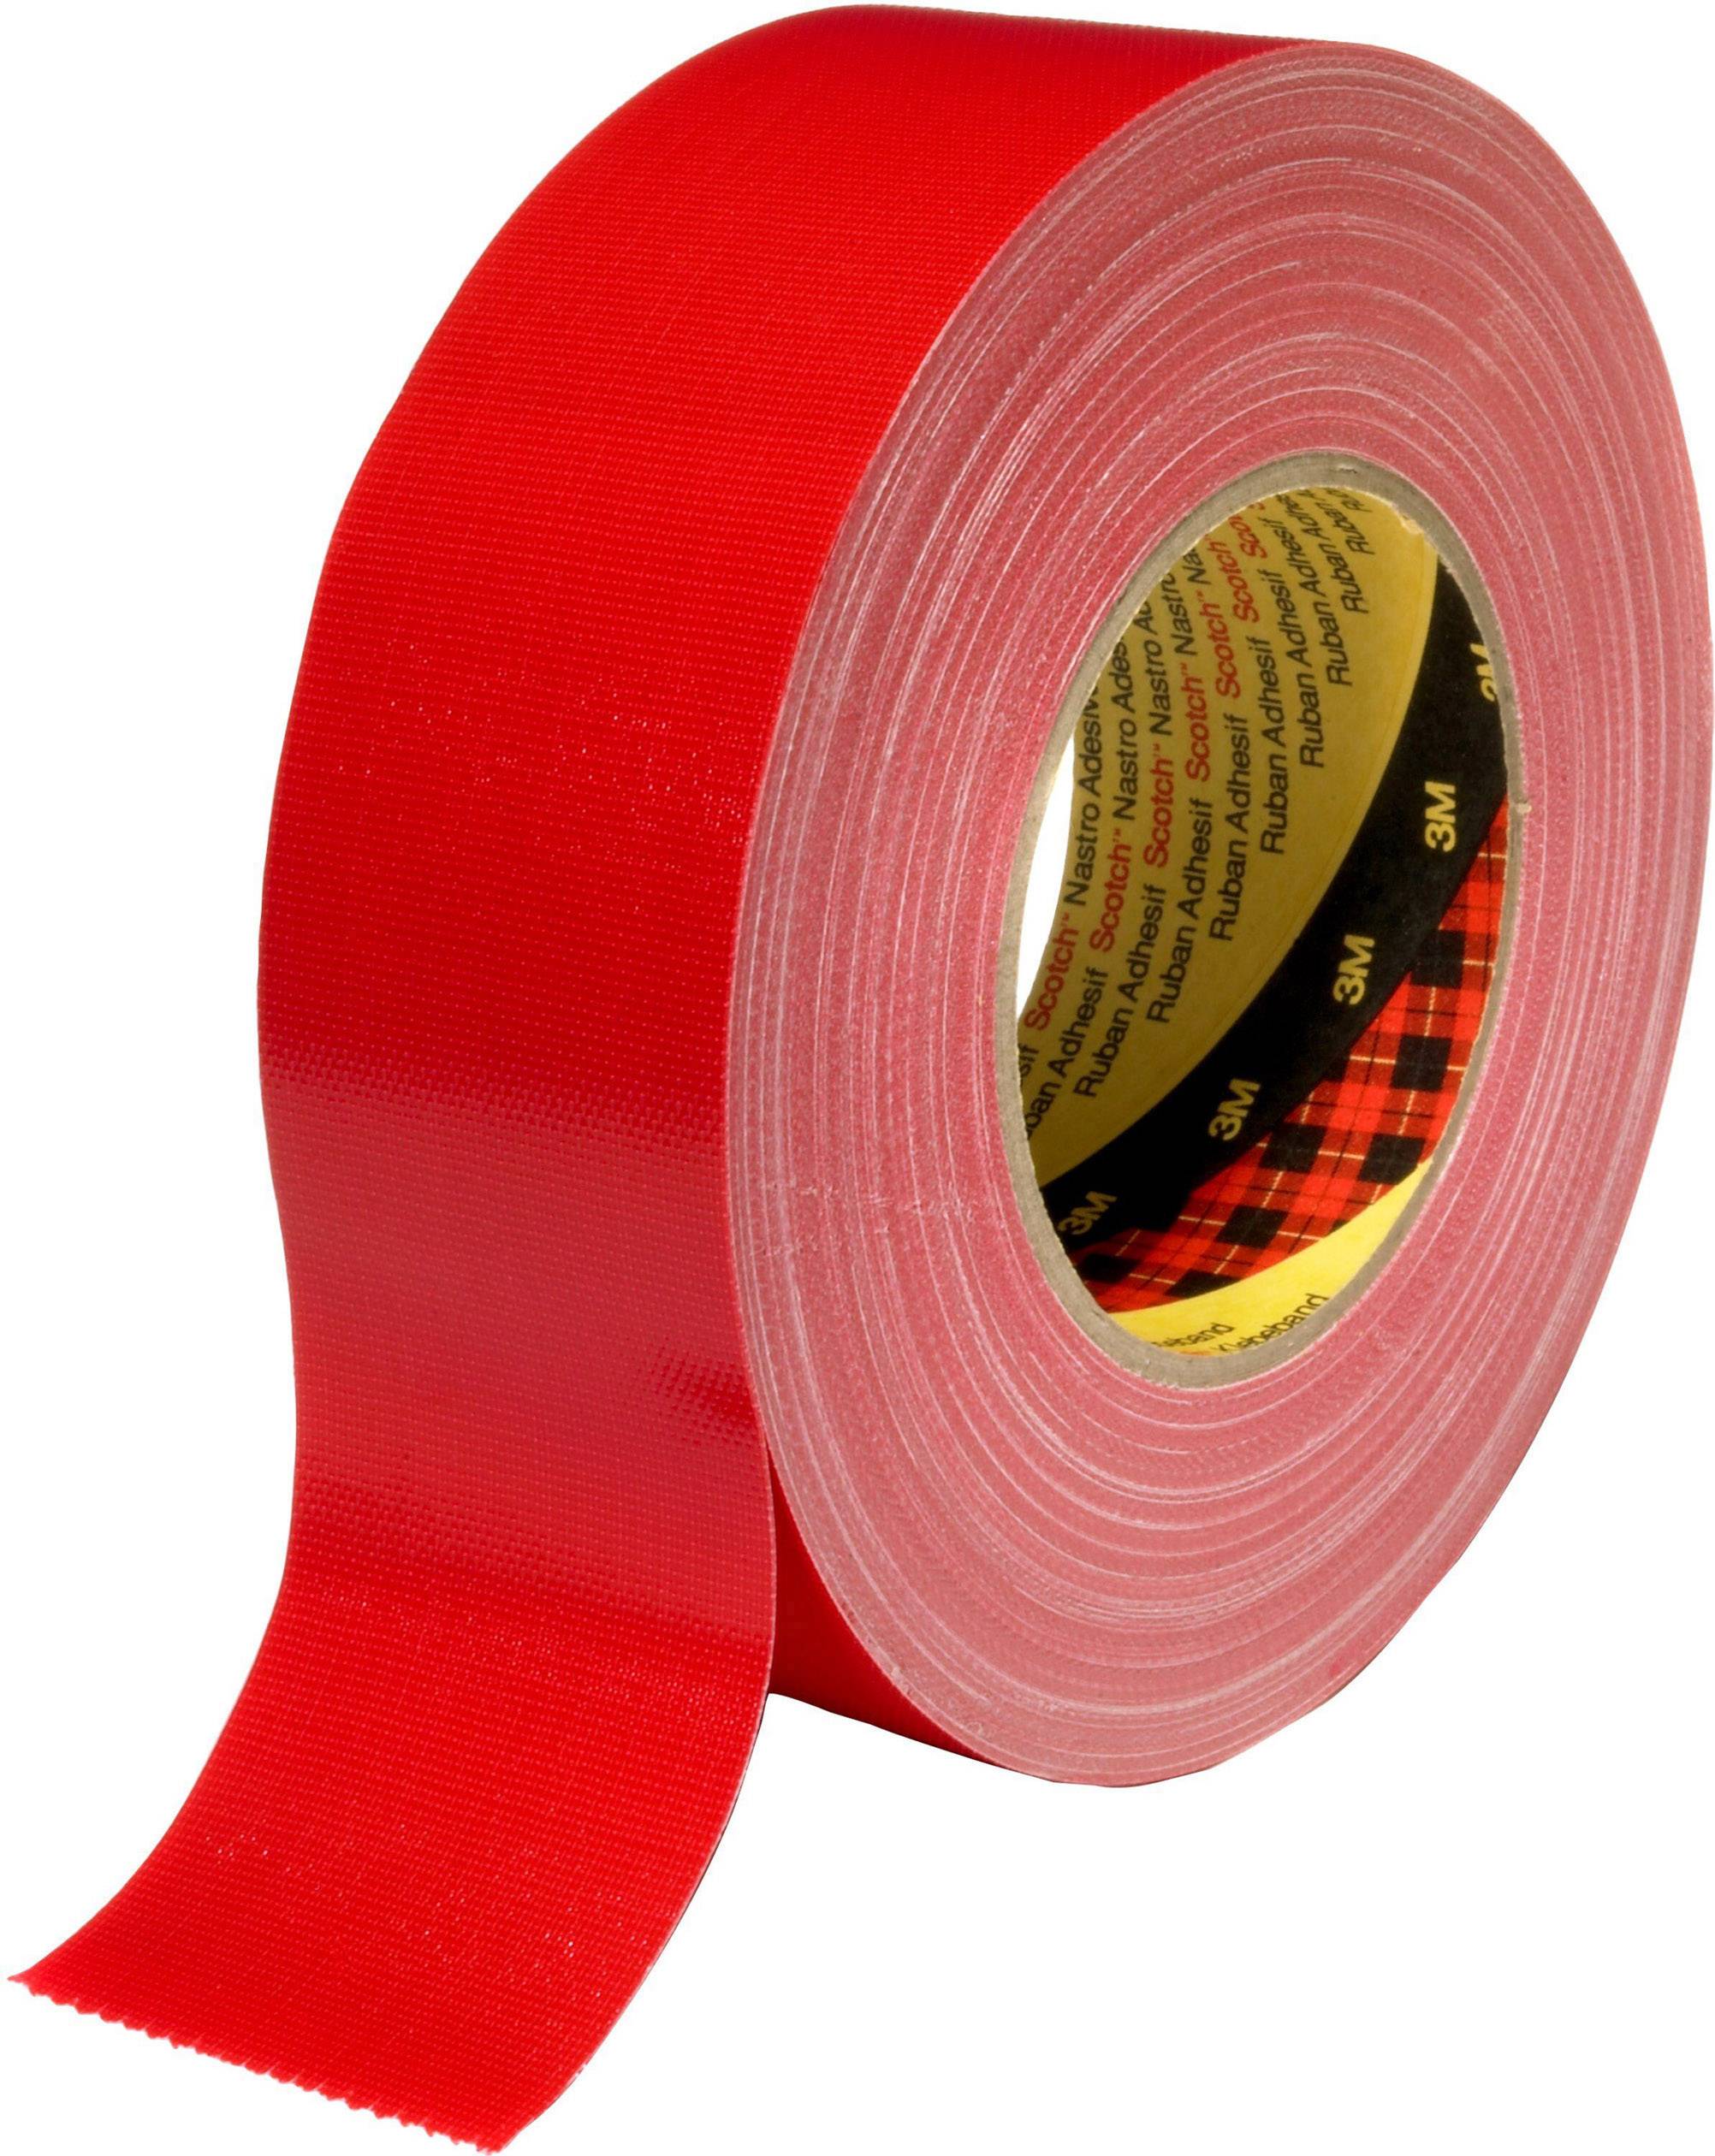 3M 389R100 Gewebeklebeband Rot (L x B) 50 m x 100 mm 50 m